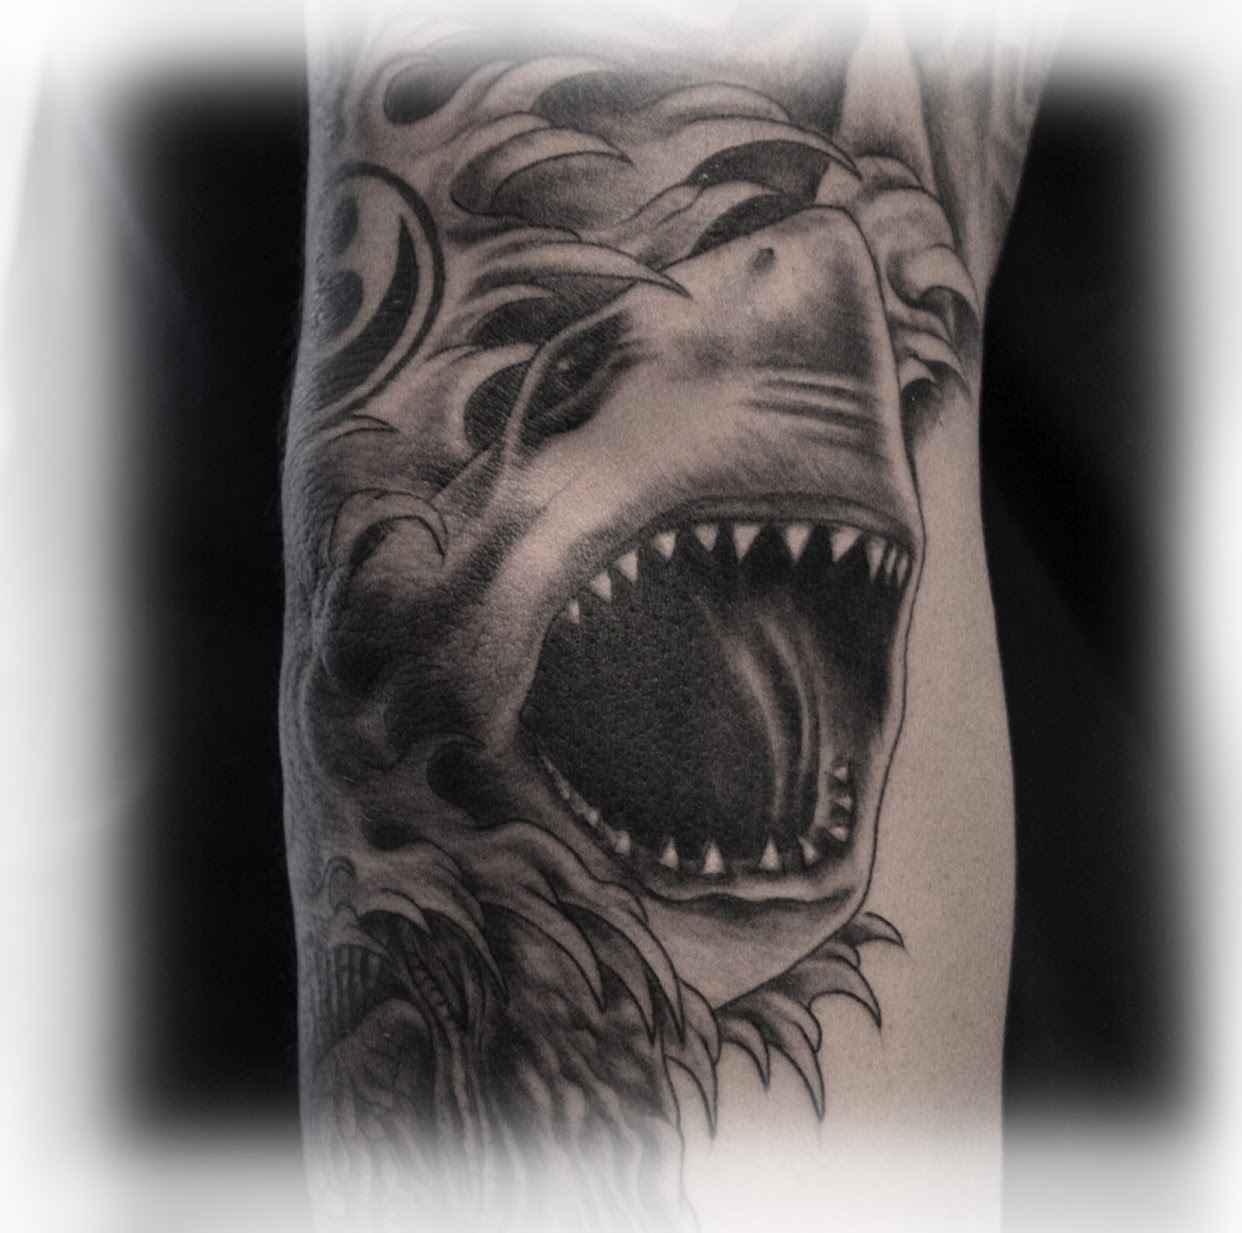 image caption: Shark and crocodile tattoo title=